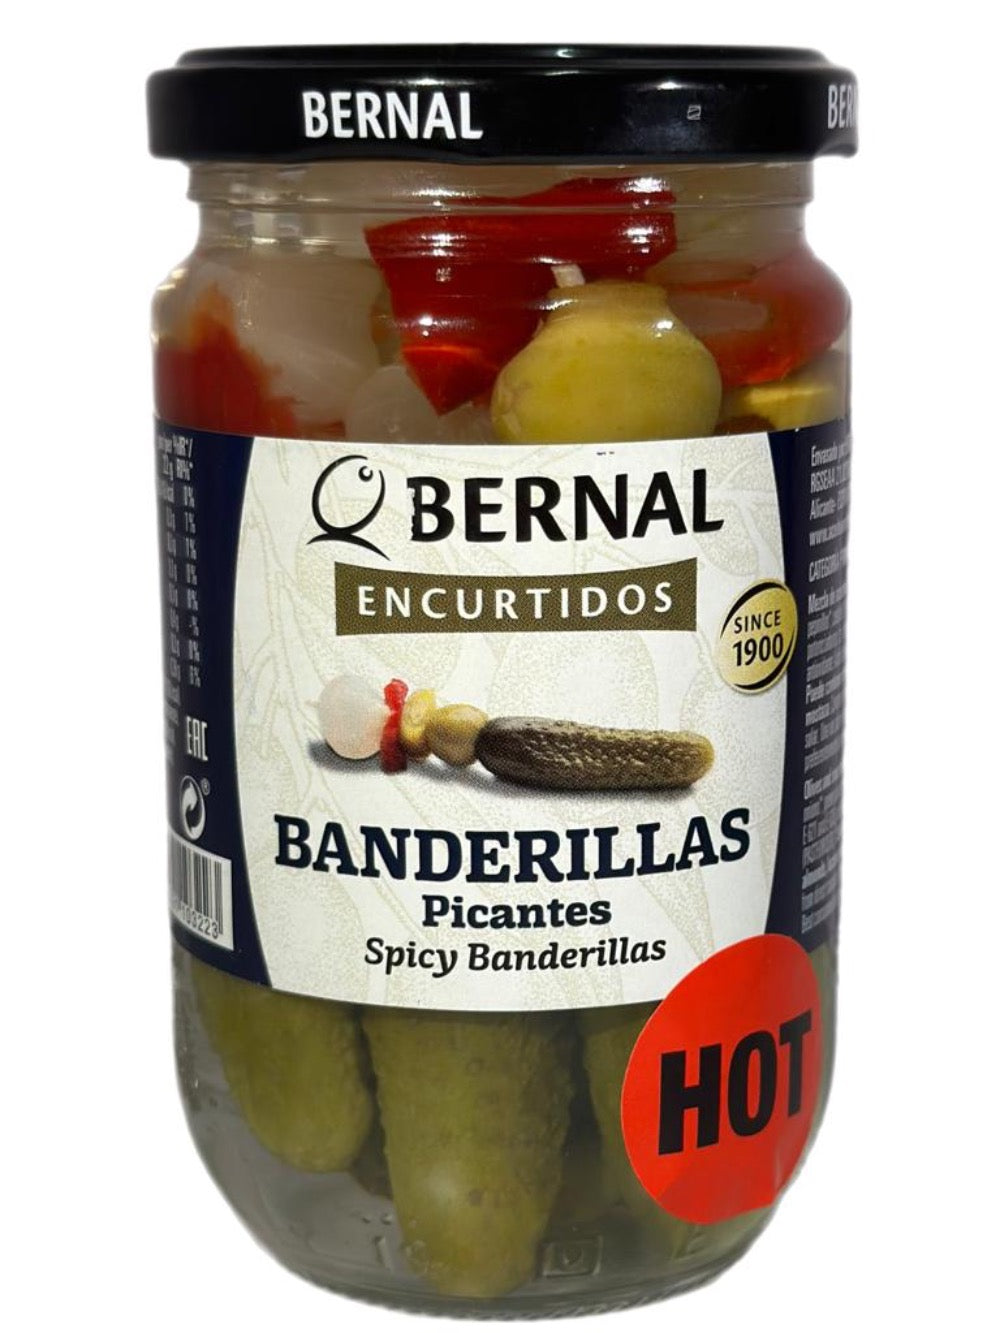 Bernal Banderillas Picantes Spicy Banderillas Cocktail 2 Pack 300g x2